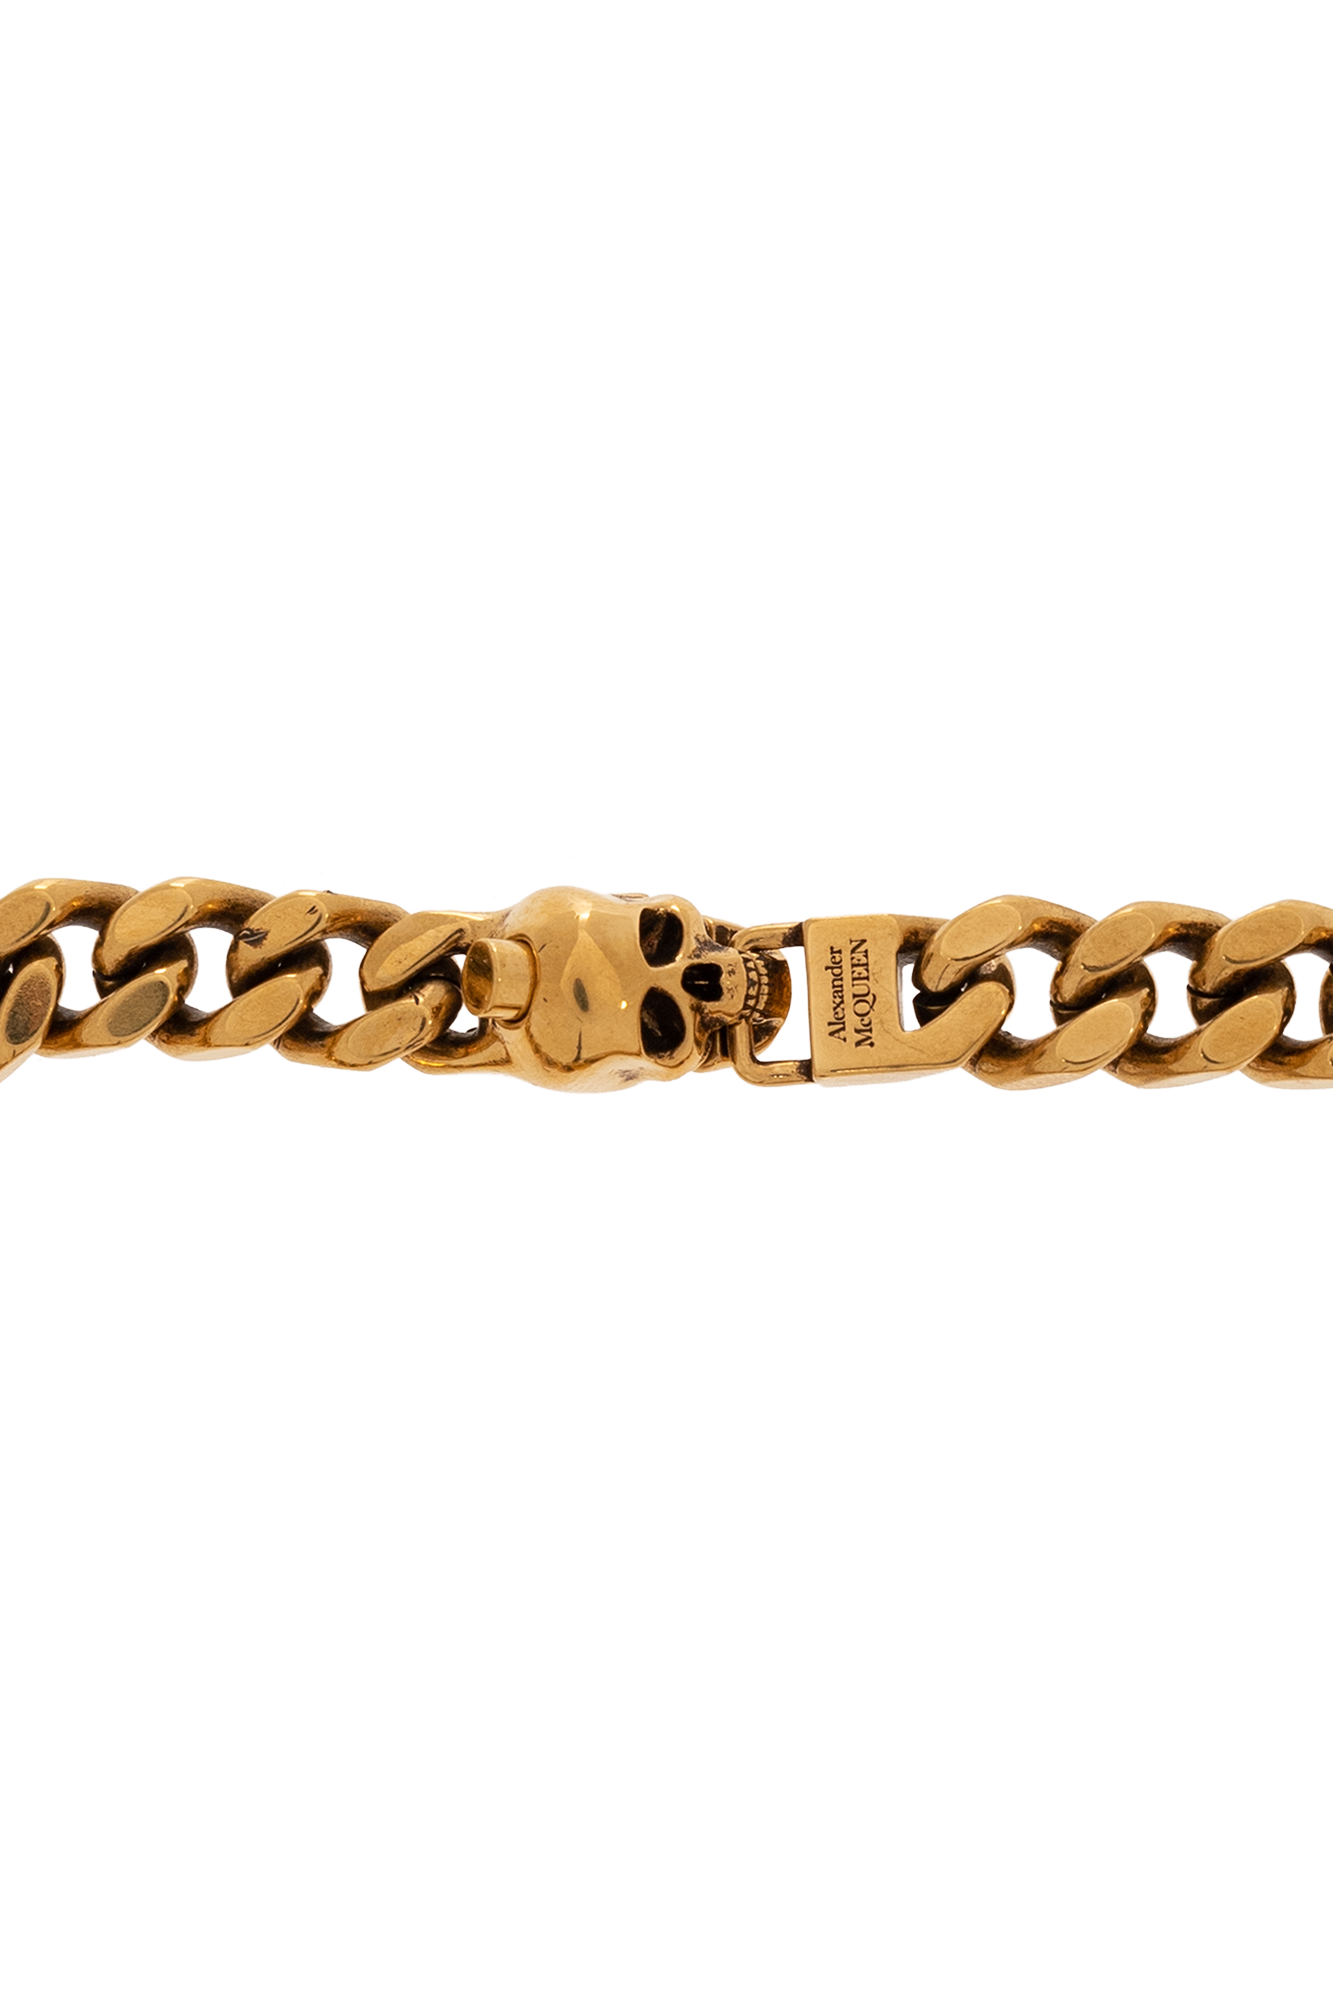 Alexander McQueen Brass bracelet